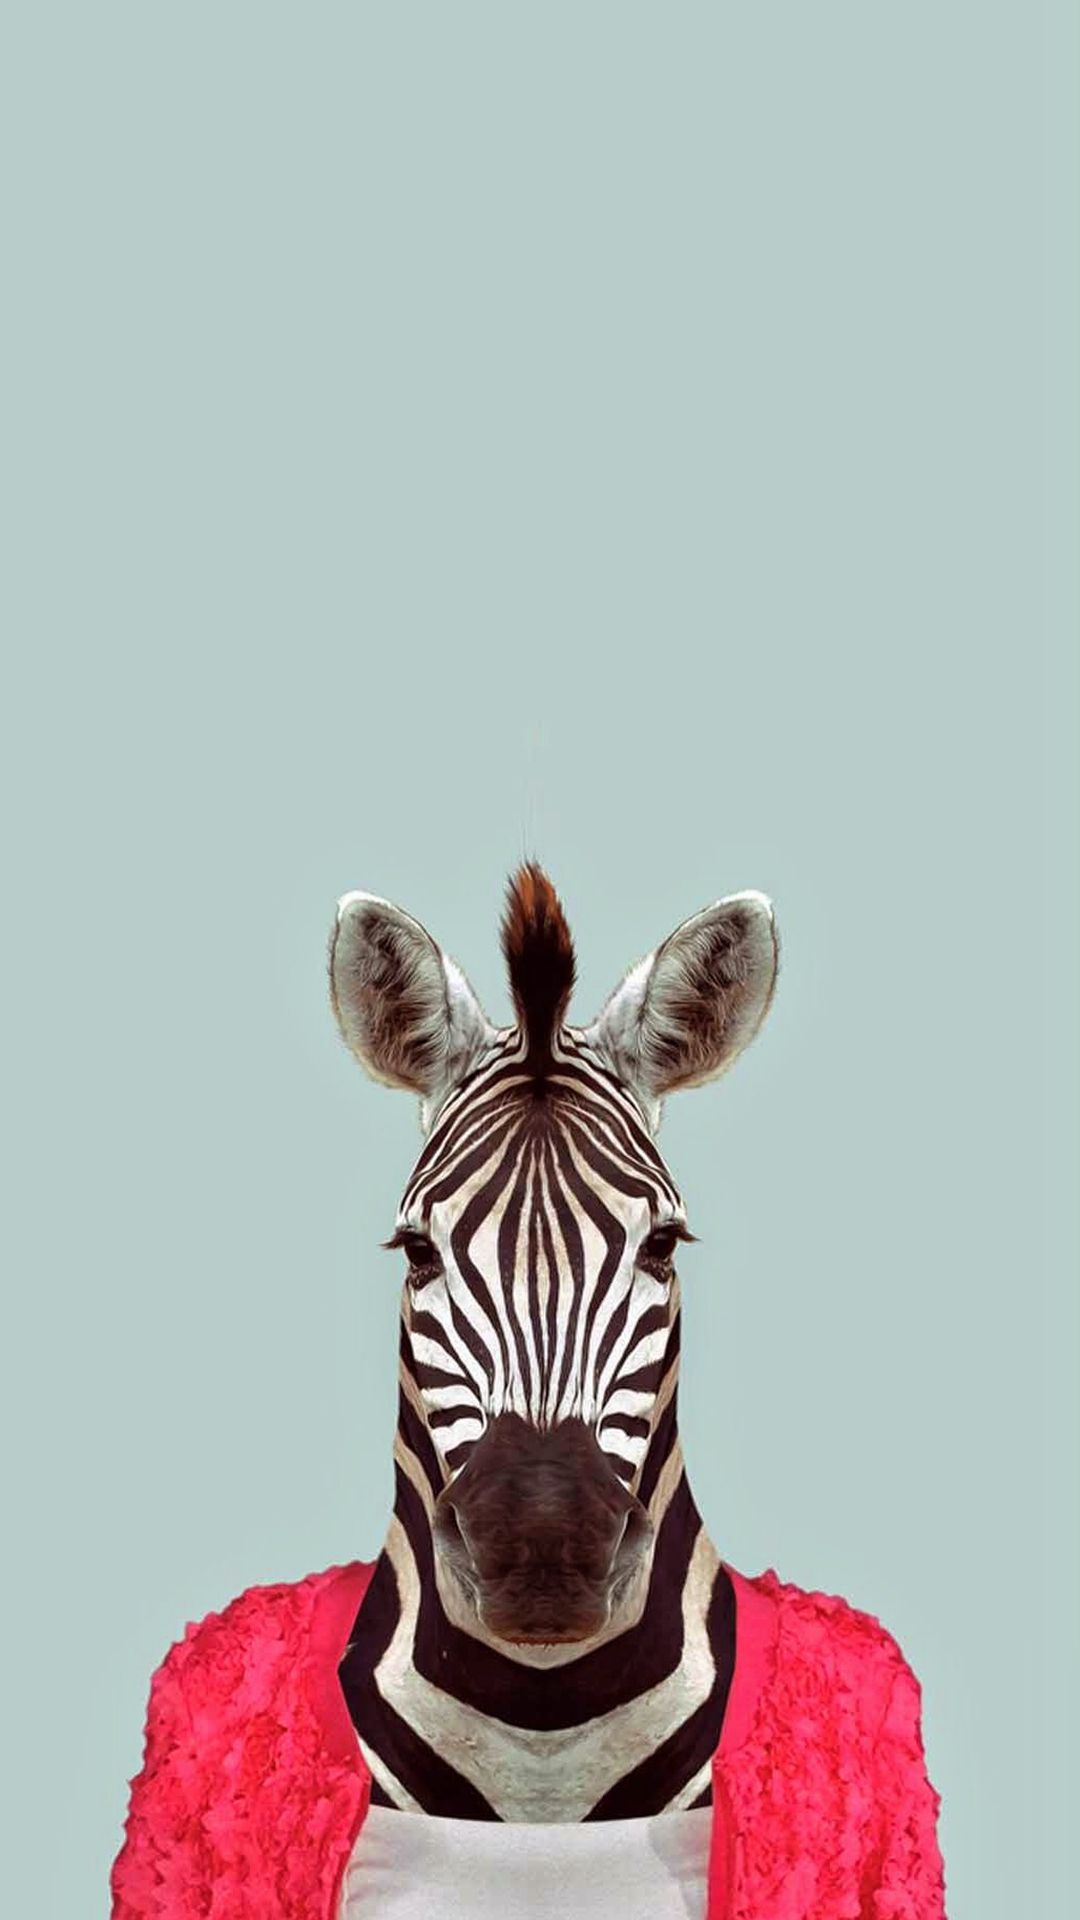 Zebra Funny Animal Portrait IPhone 6 Wallpaper Download. IPhone Wallpaper, IPad Wallpaper One Stop Download. Apple Wallpaper, IPhone Wallpaper, Pet Portraits